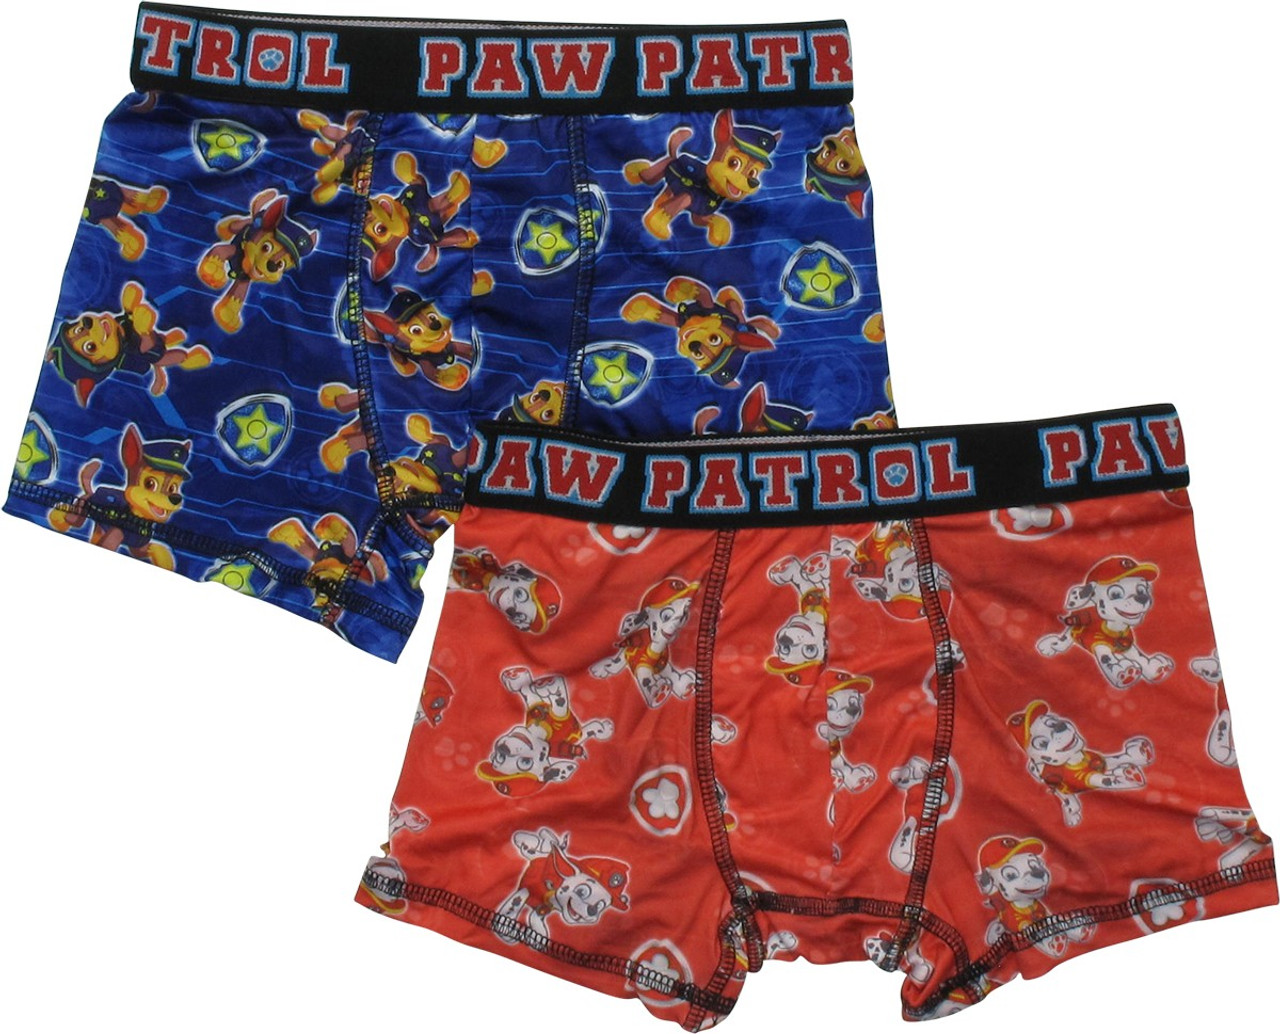  Paw Patrol Underwear